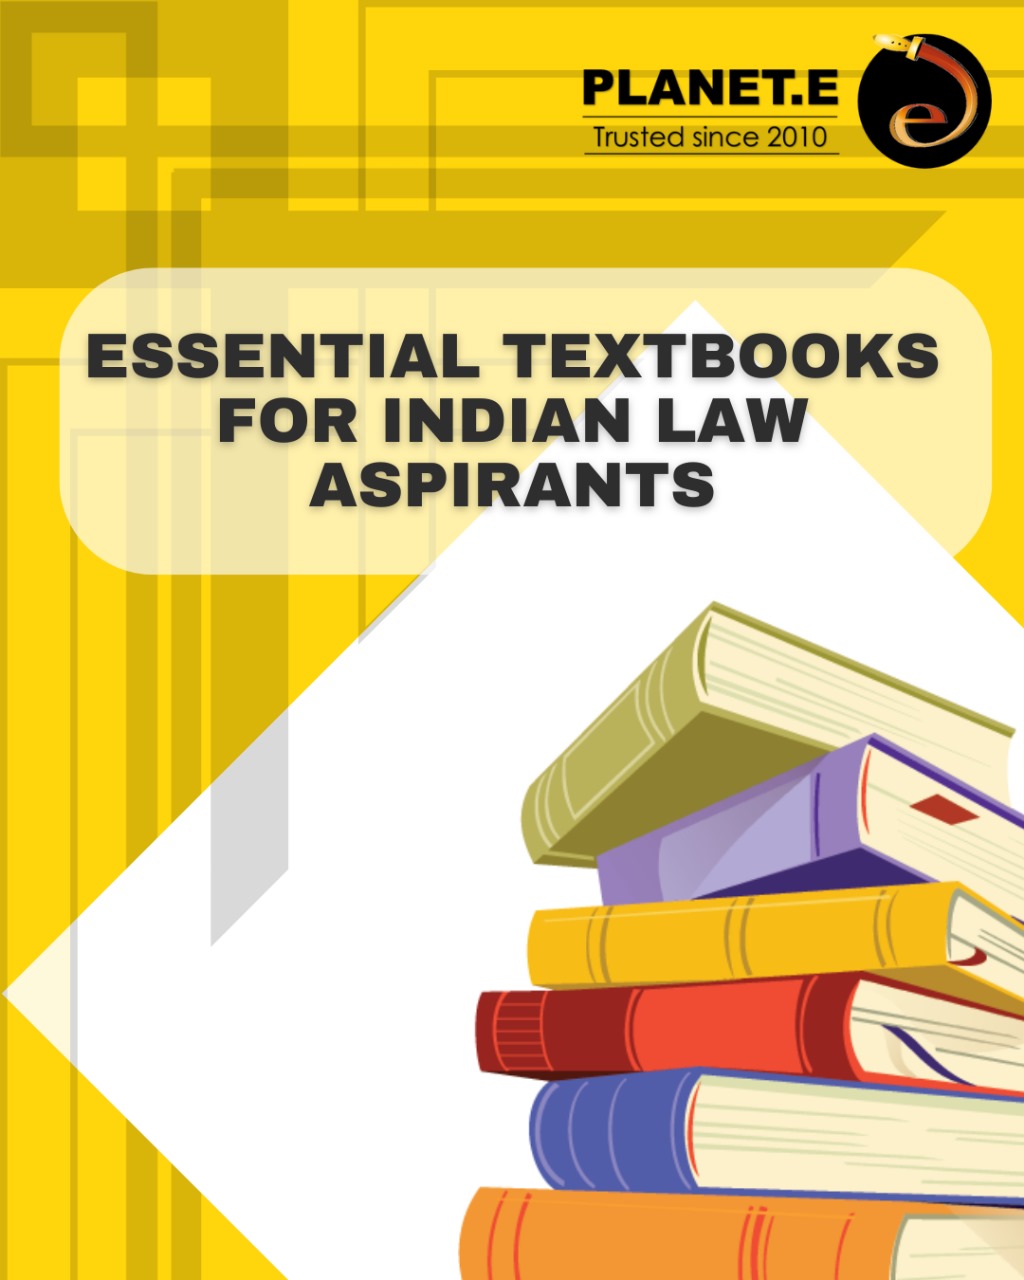 Books for Law Aspirants